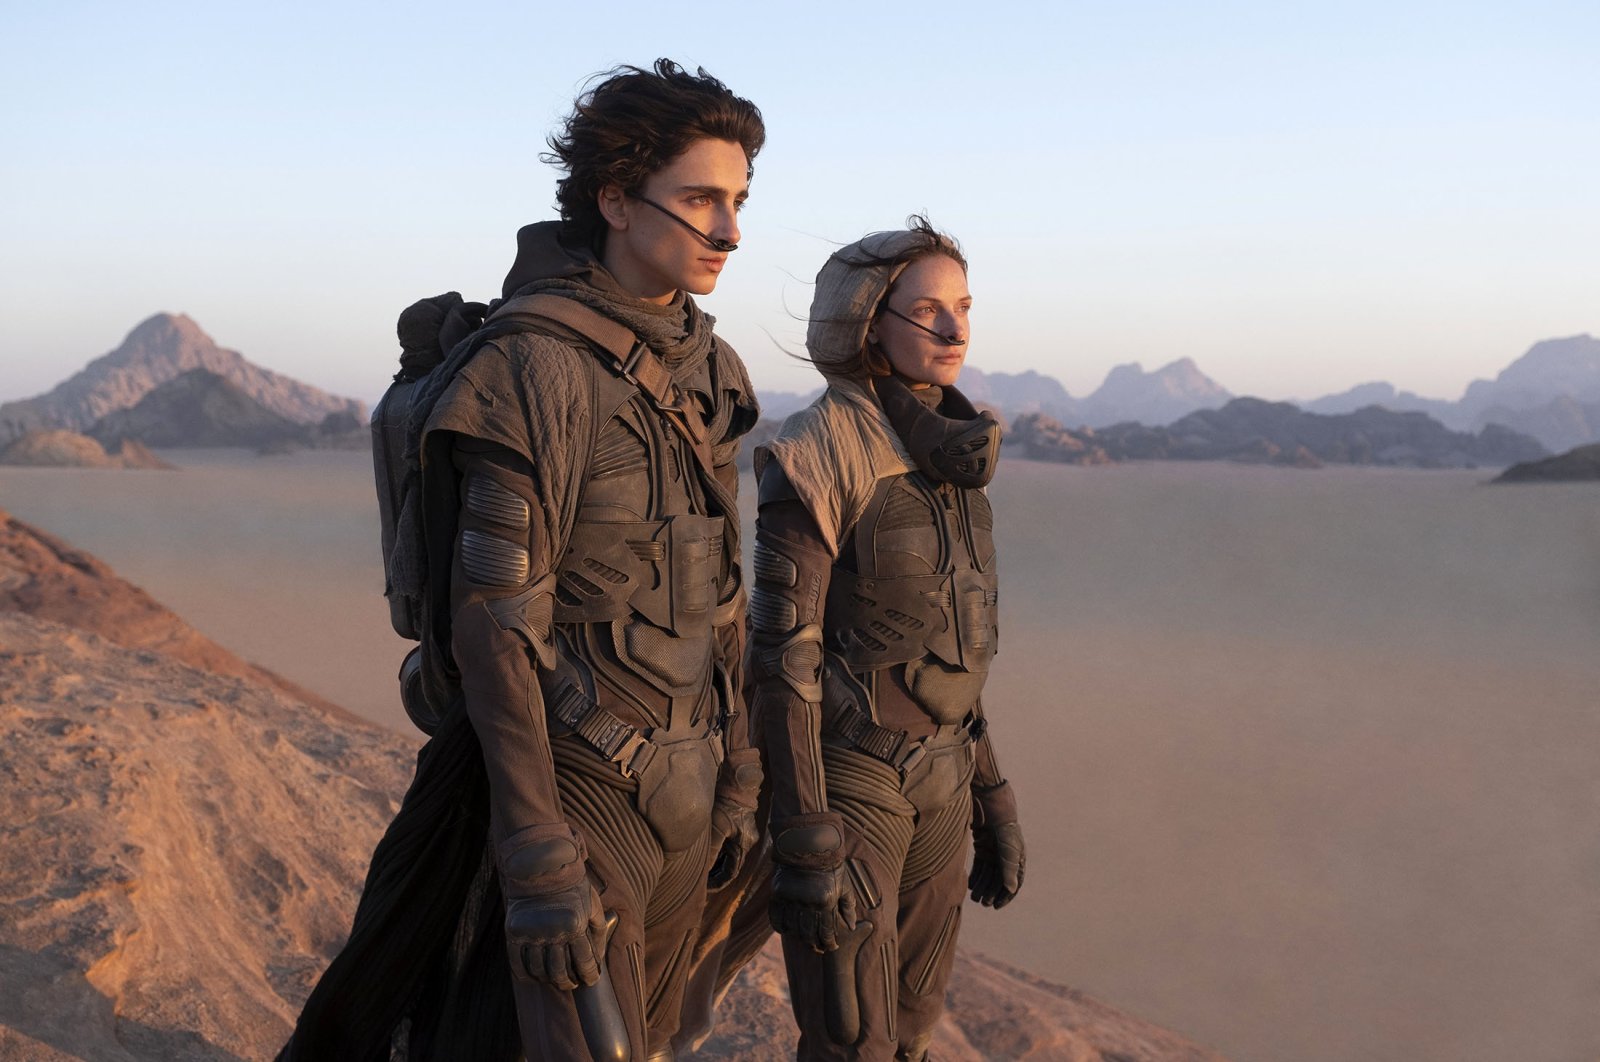 Timothee Chalamet (L) and Rebecca Ferguson in a scene from the film "Dune." (Warner Bros. via AP)